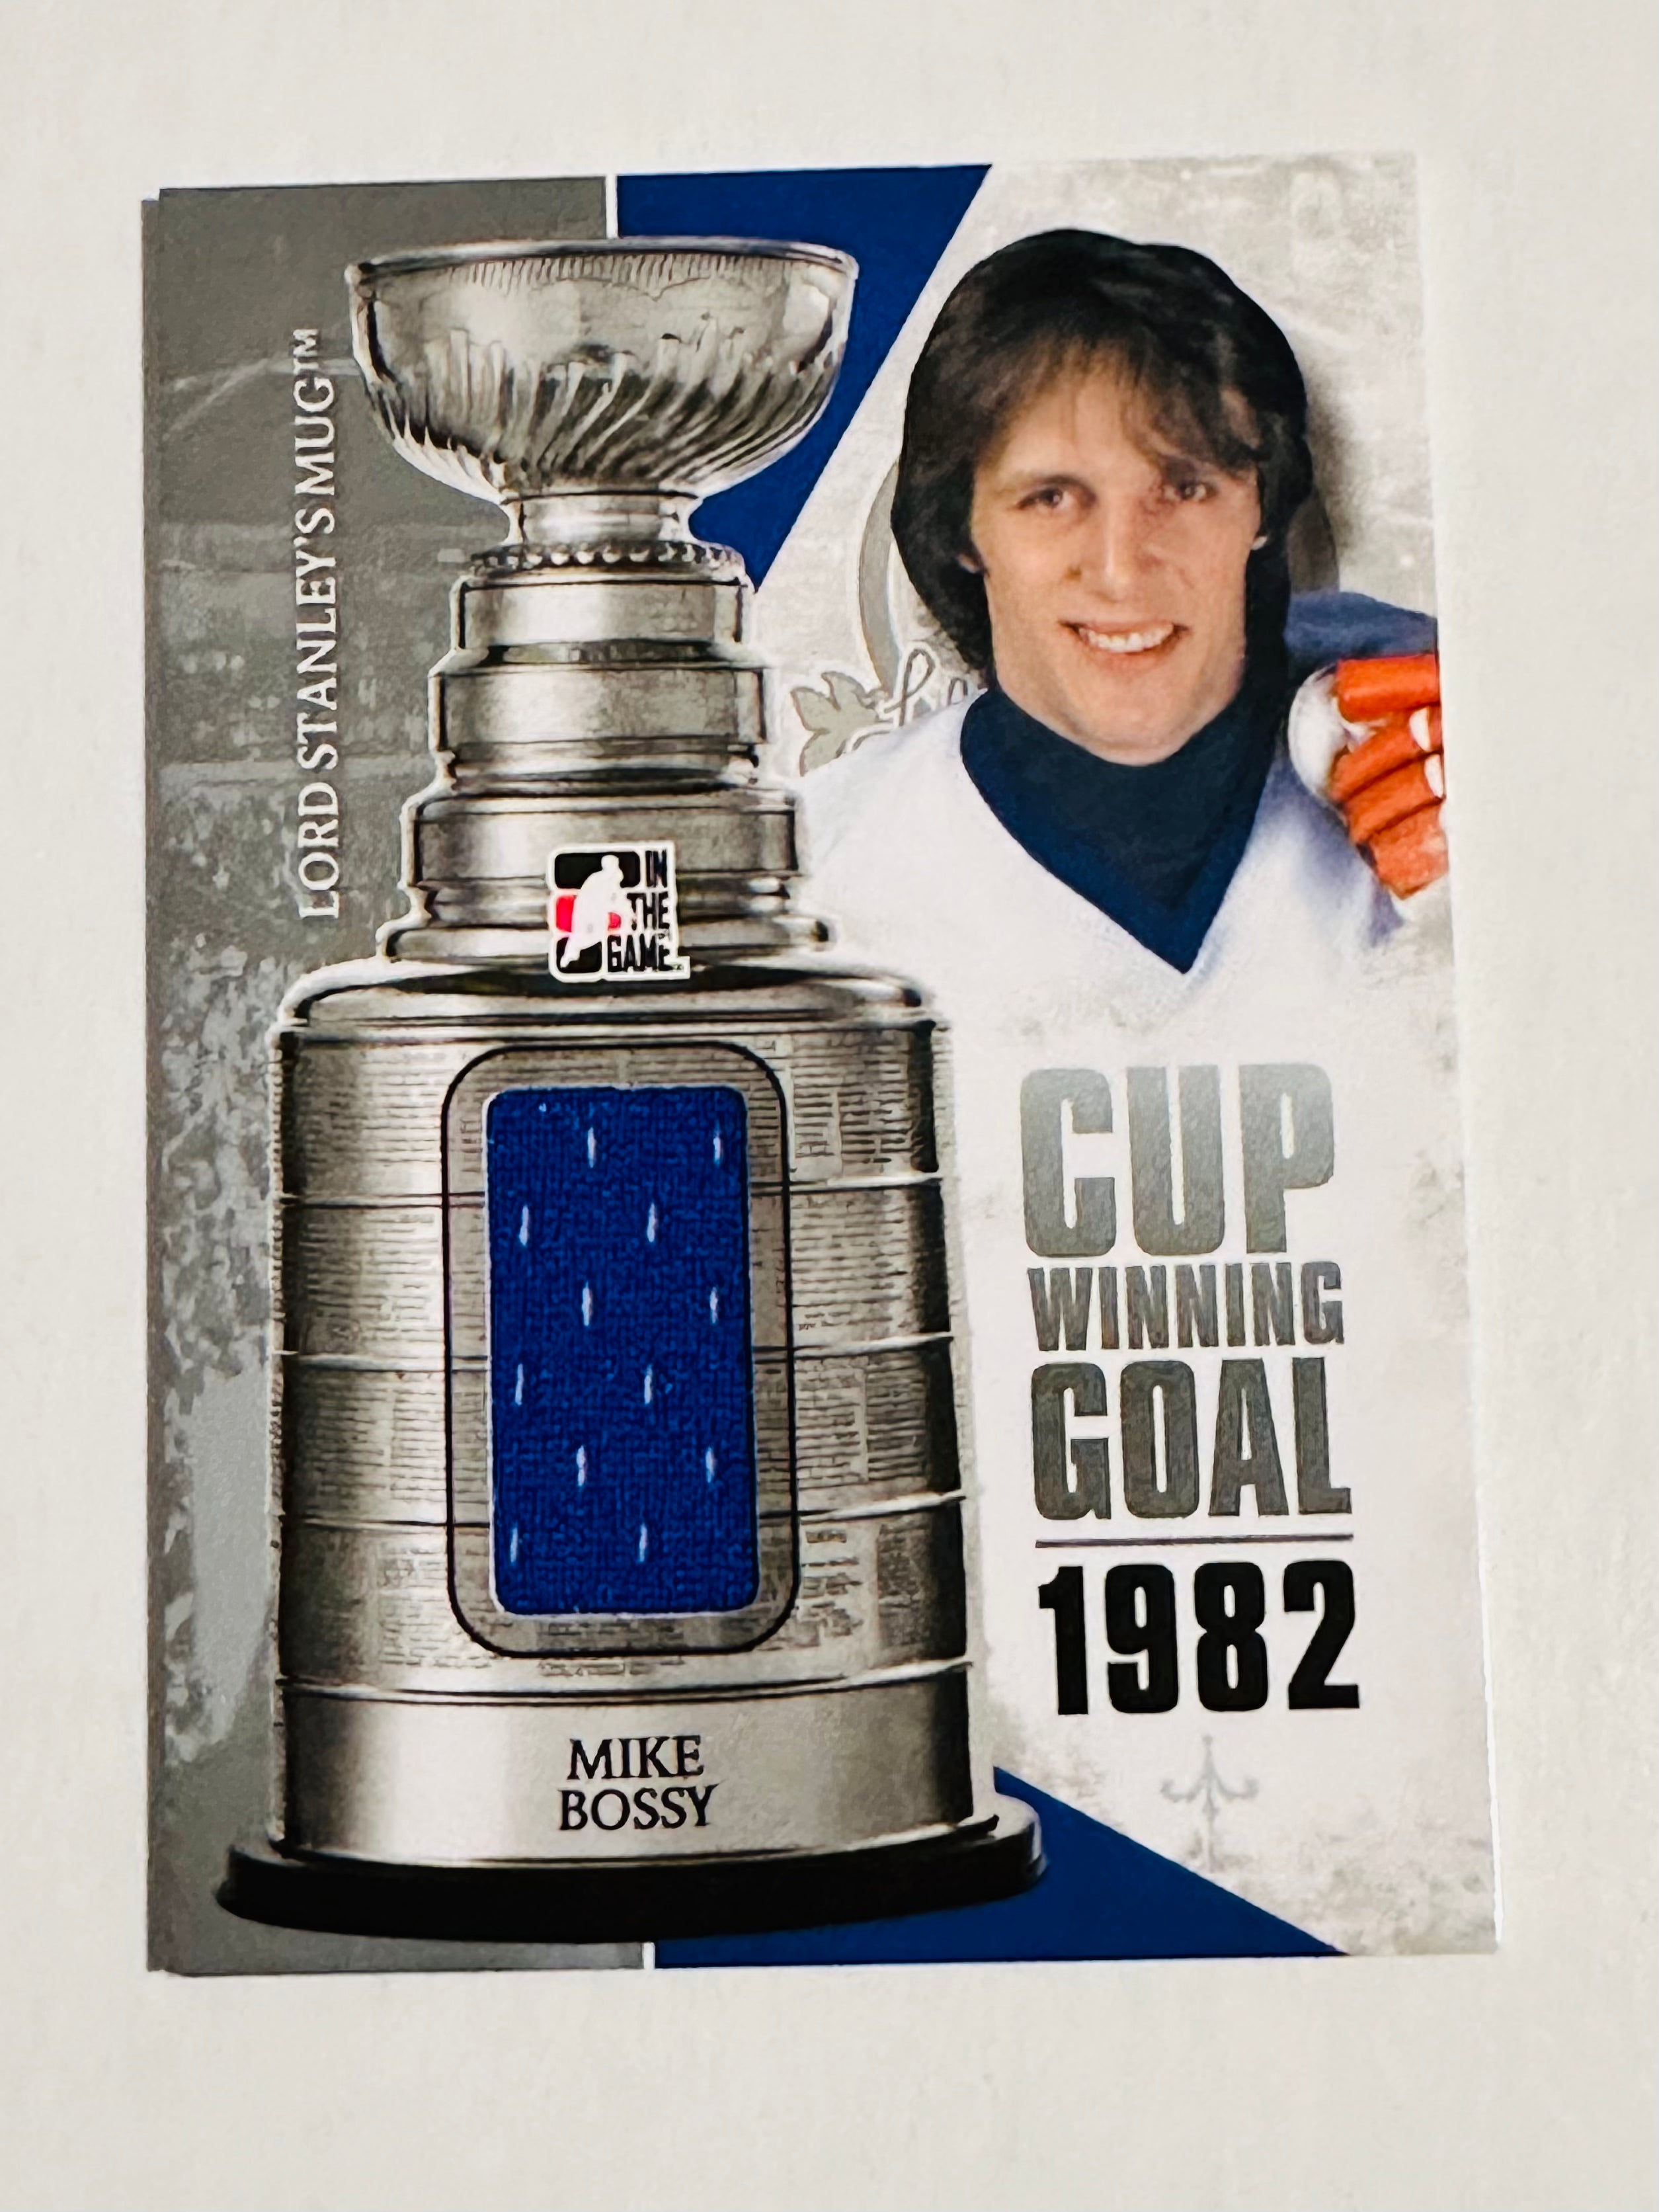 Mike Bossy cup, winning goal hockey memorabilia insert card, 2014